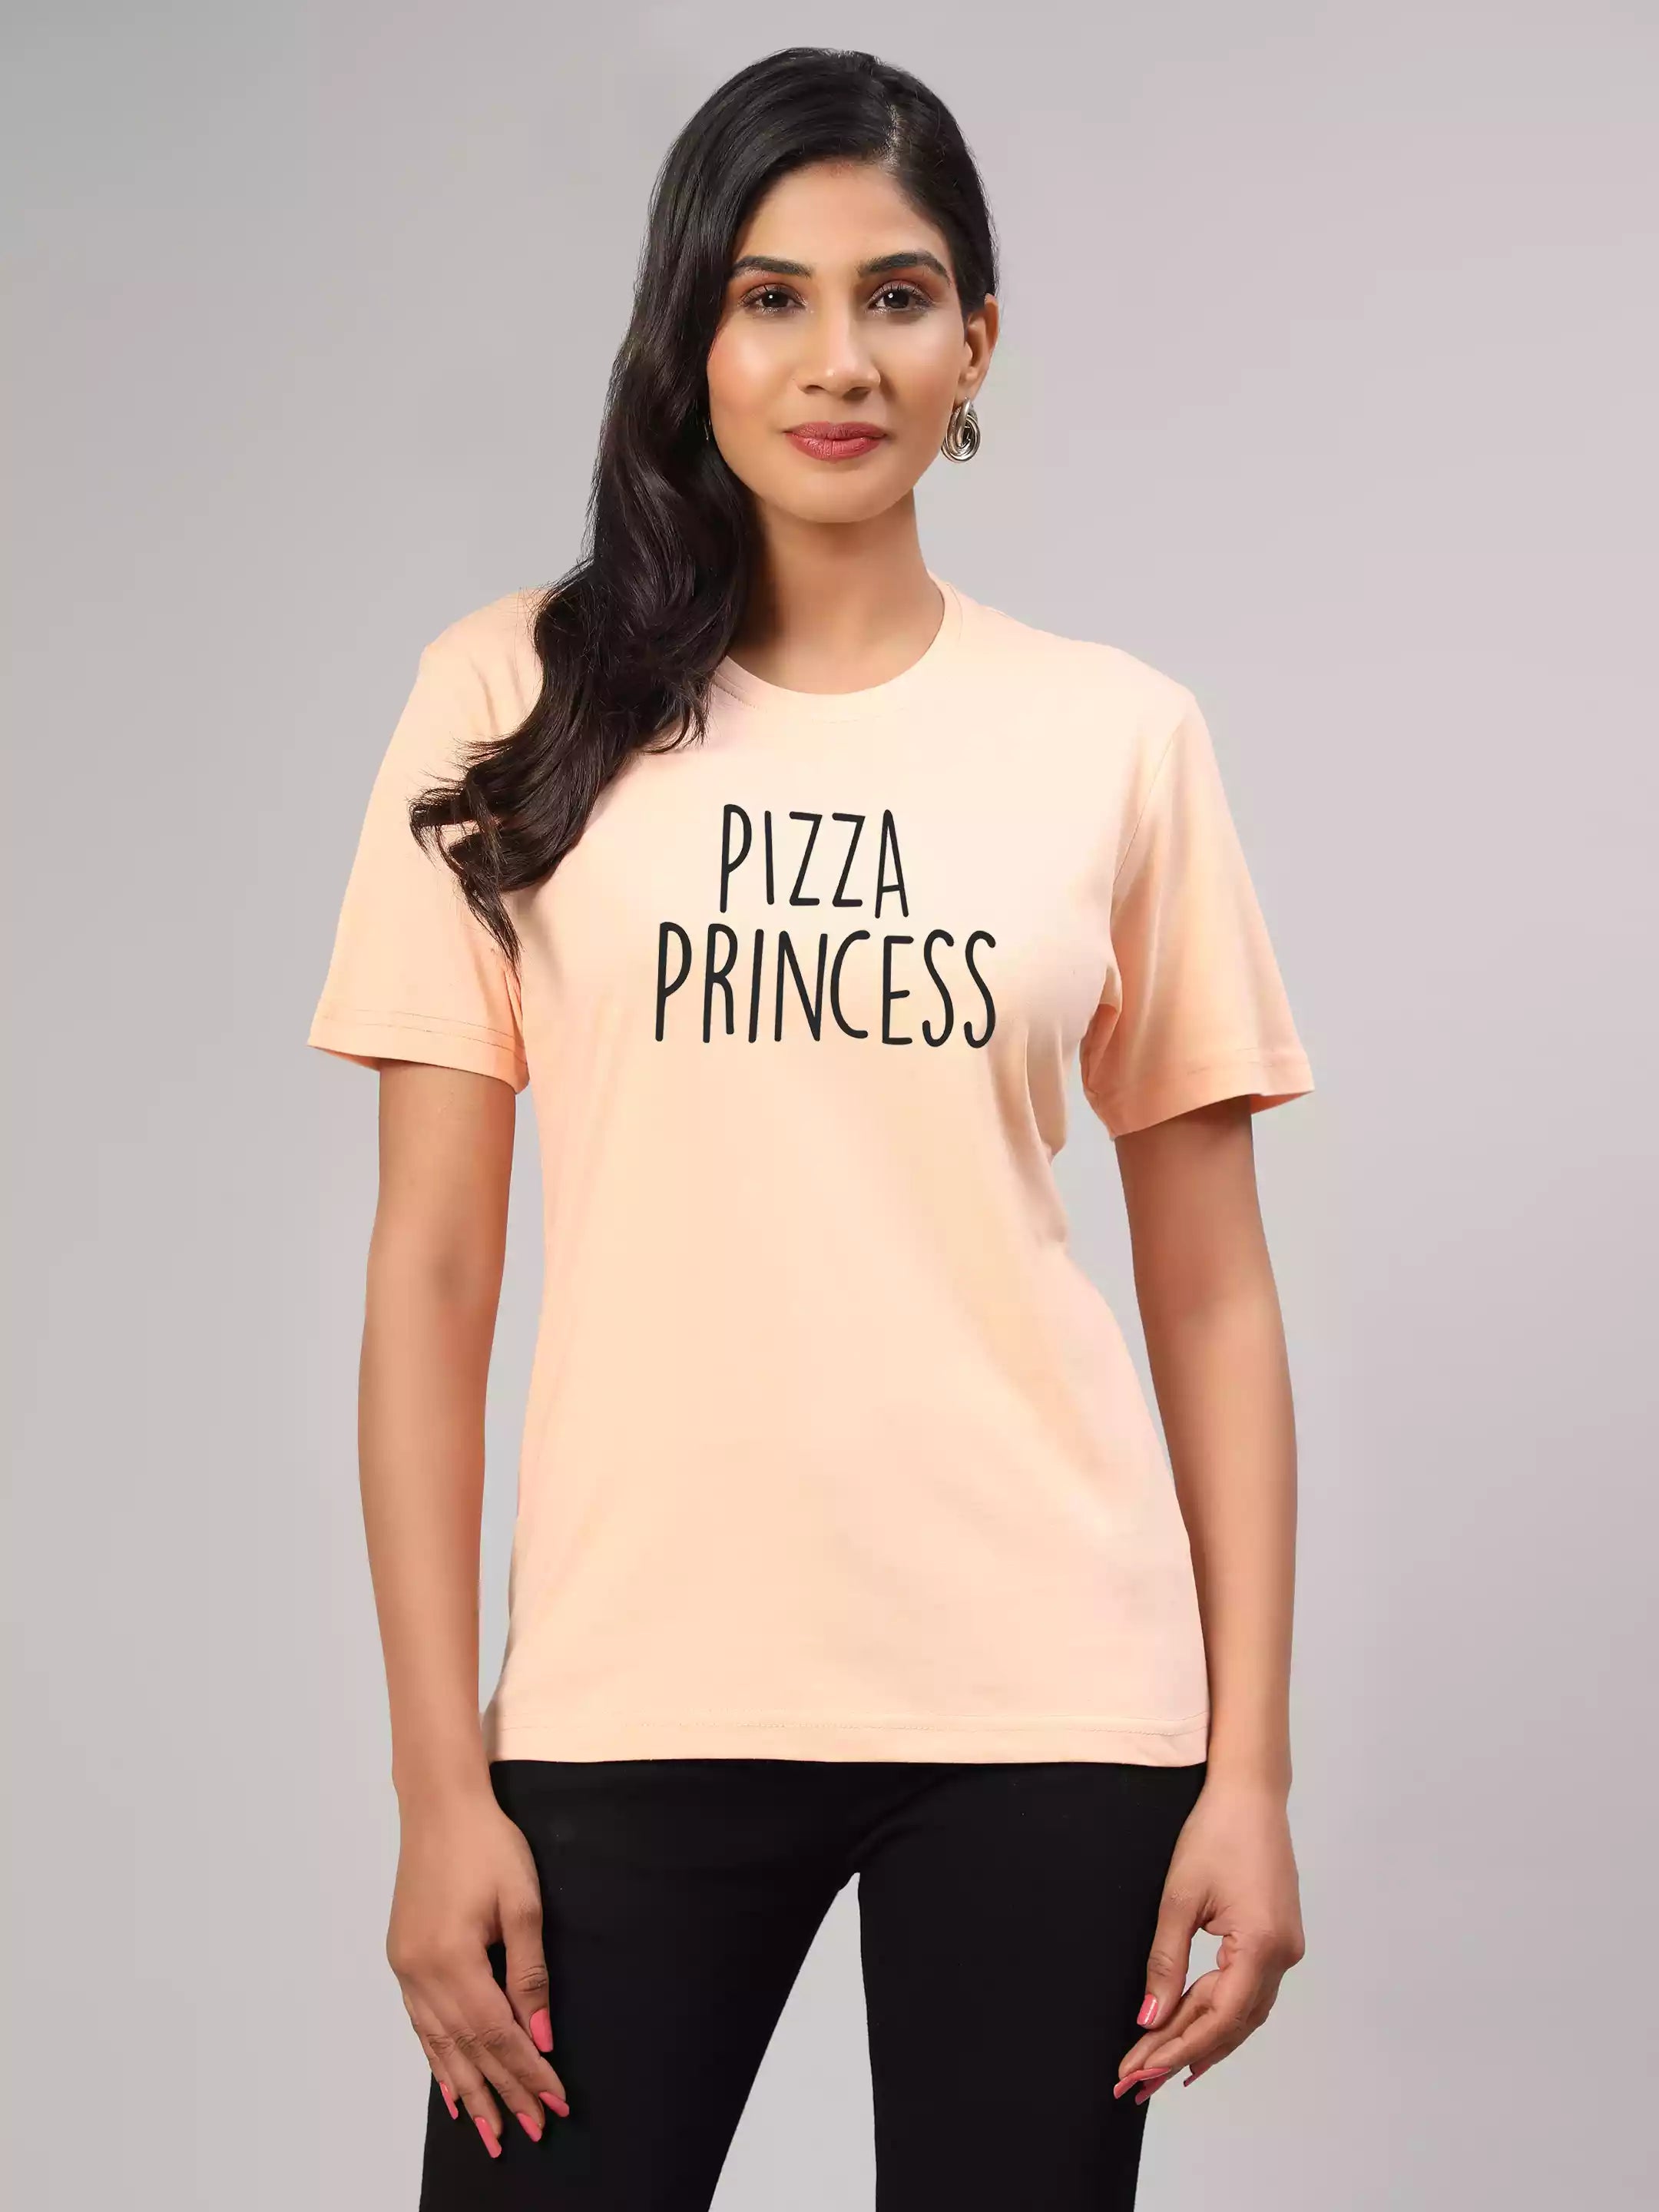 Pizza Princess